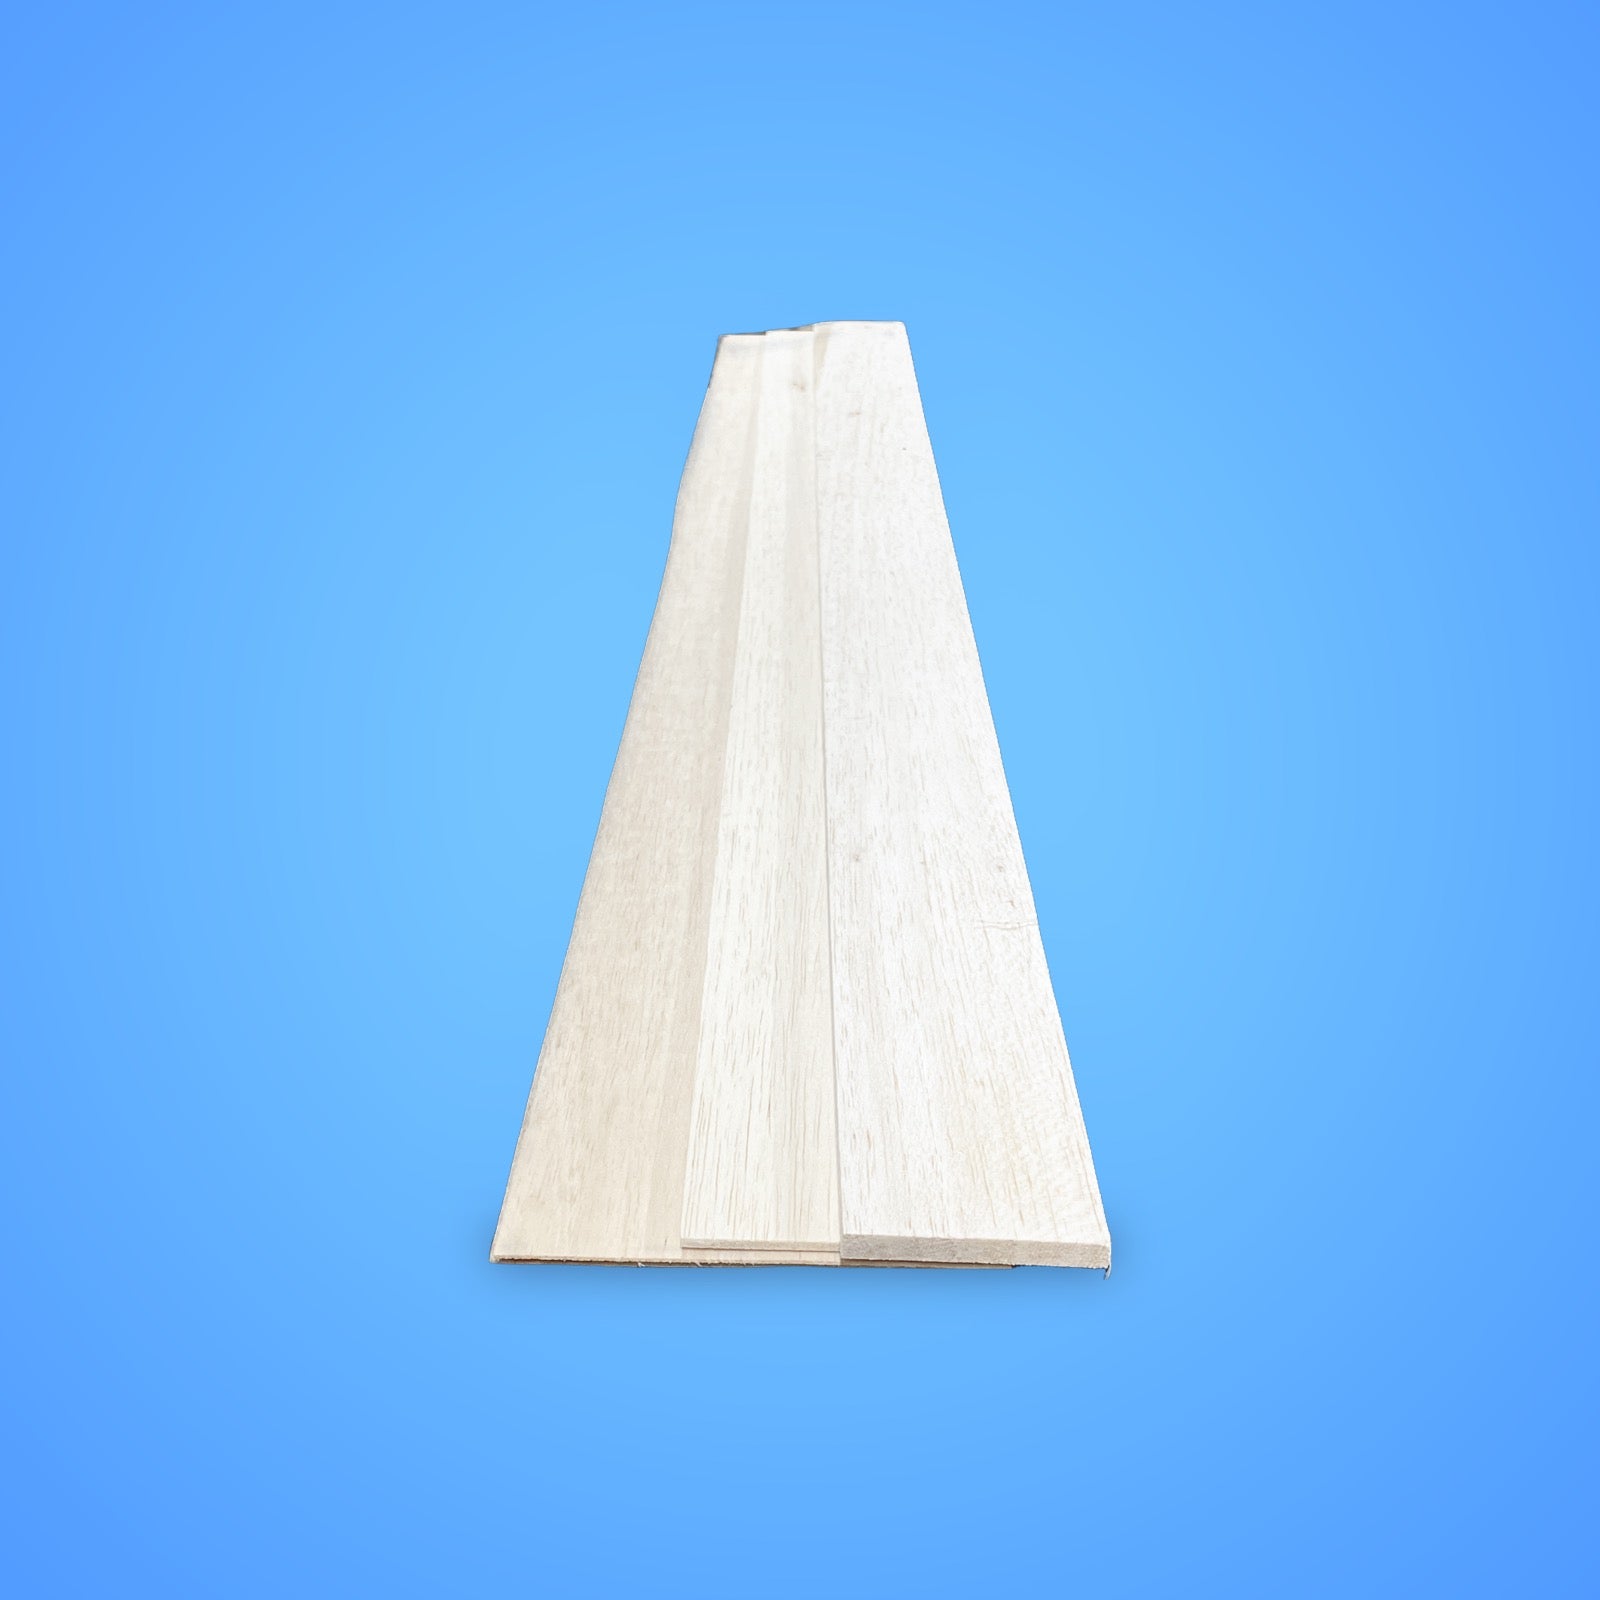 3/32 x 3 x 48 Aero Light Balsa Wood Sheets